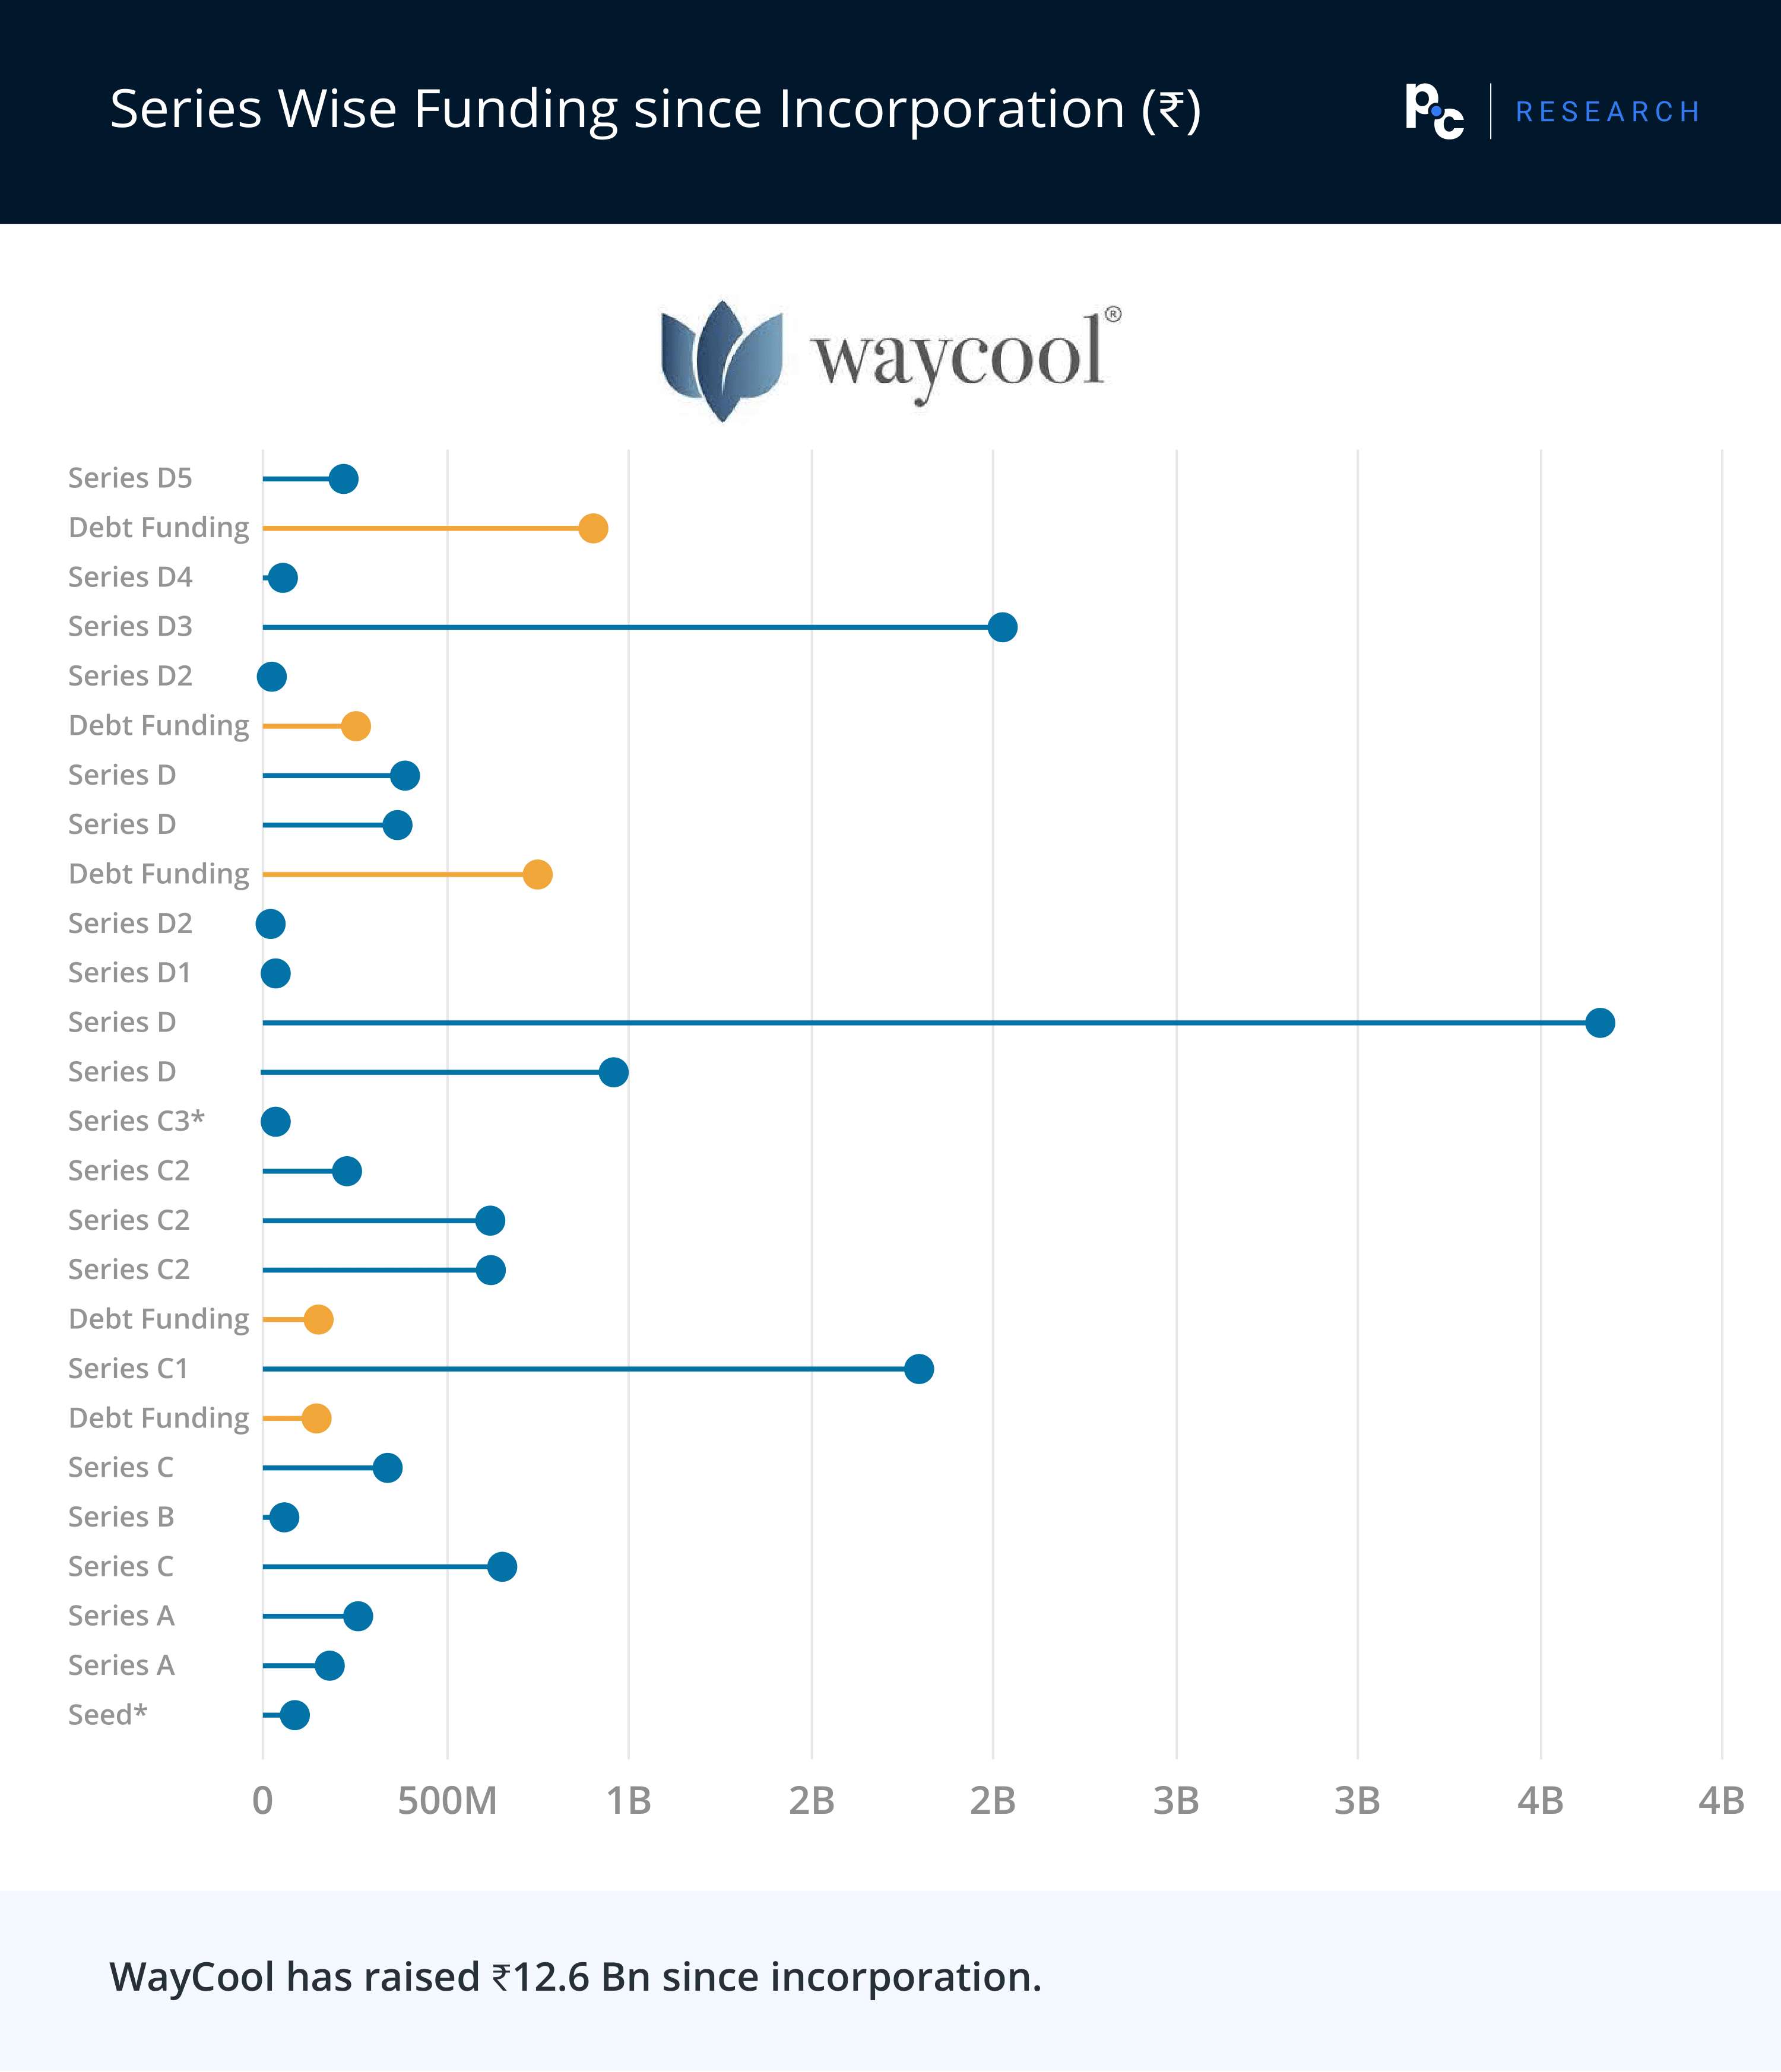 WayCool: Series Wise Funding since Incorporation (₹)

WayCool has raised around ₹12.6 Bn since its incorporation.